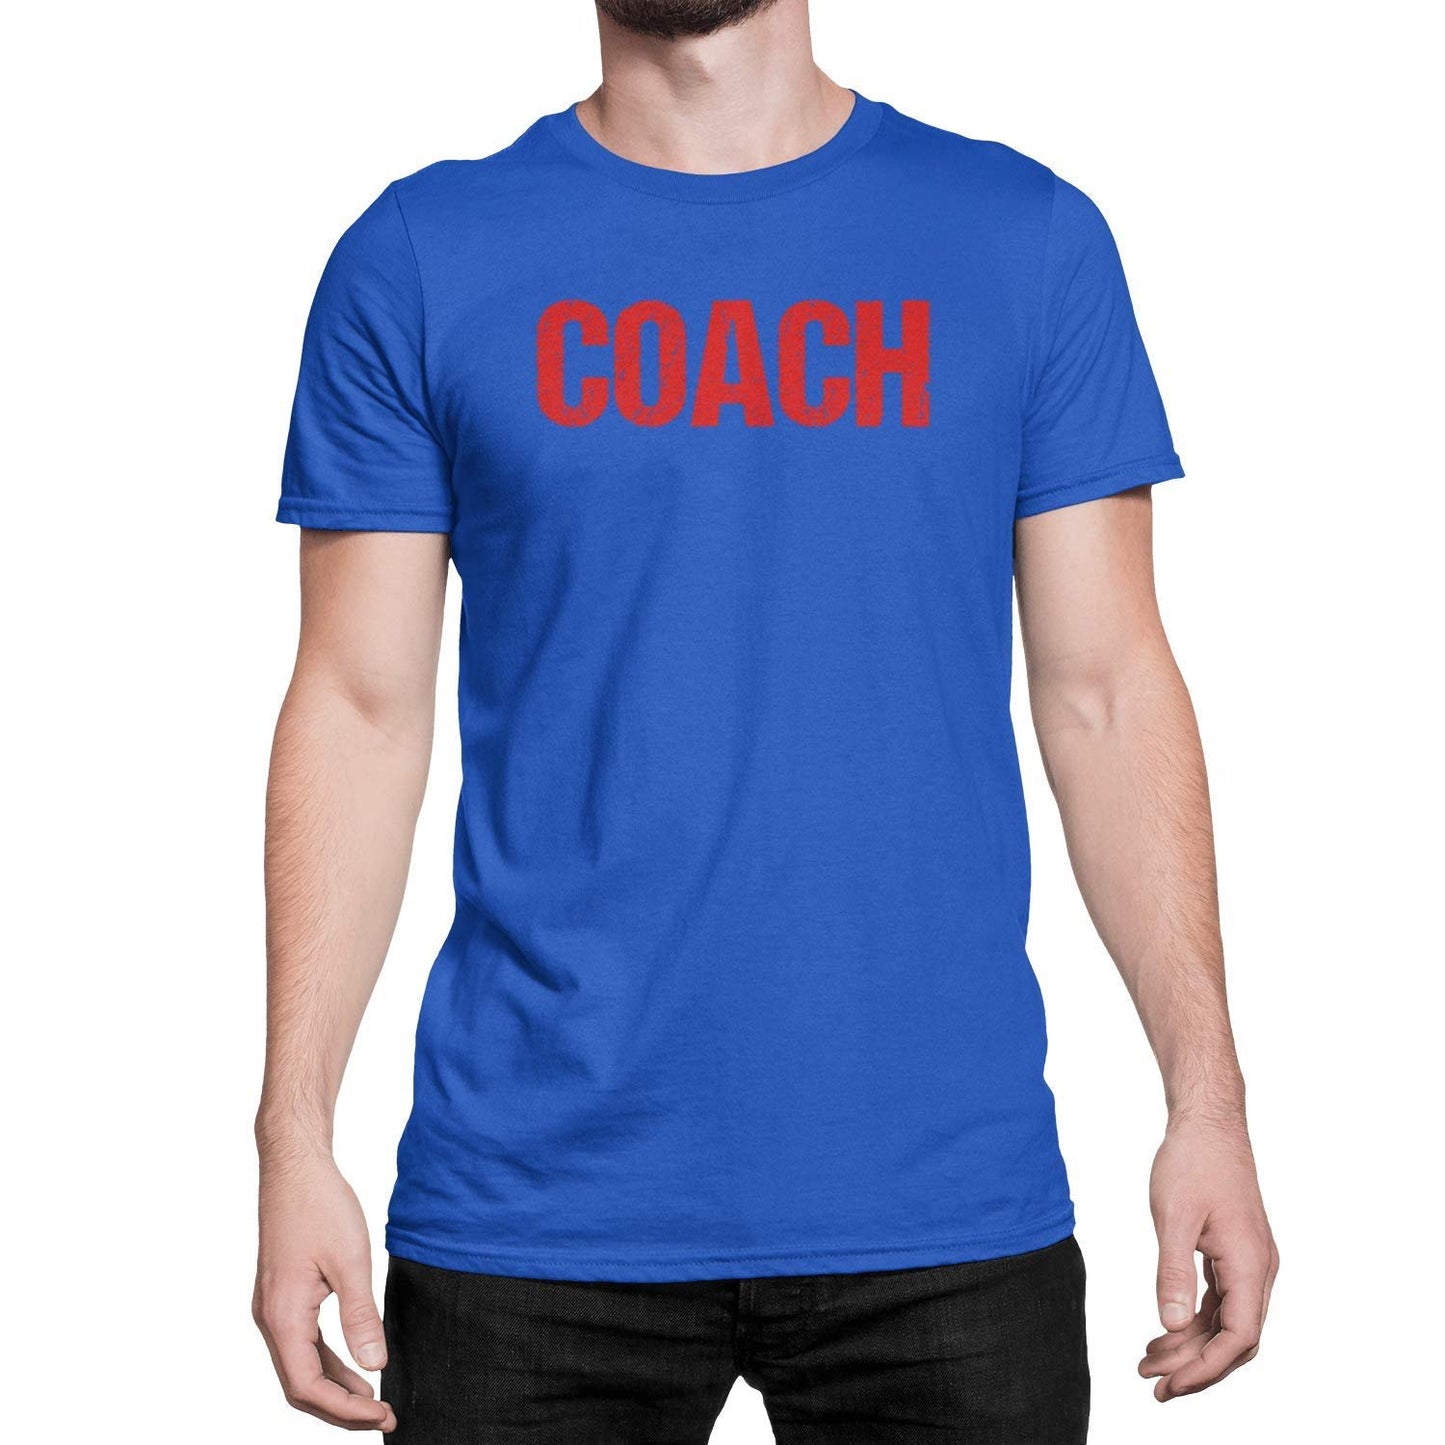 Coach T-Shirt Adult Mens Tee Shirt Front Screen Printed Coaching Tshirt Royal Blue & Red